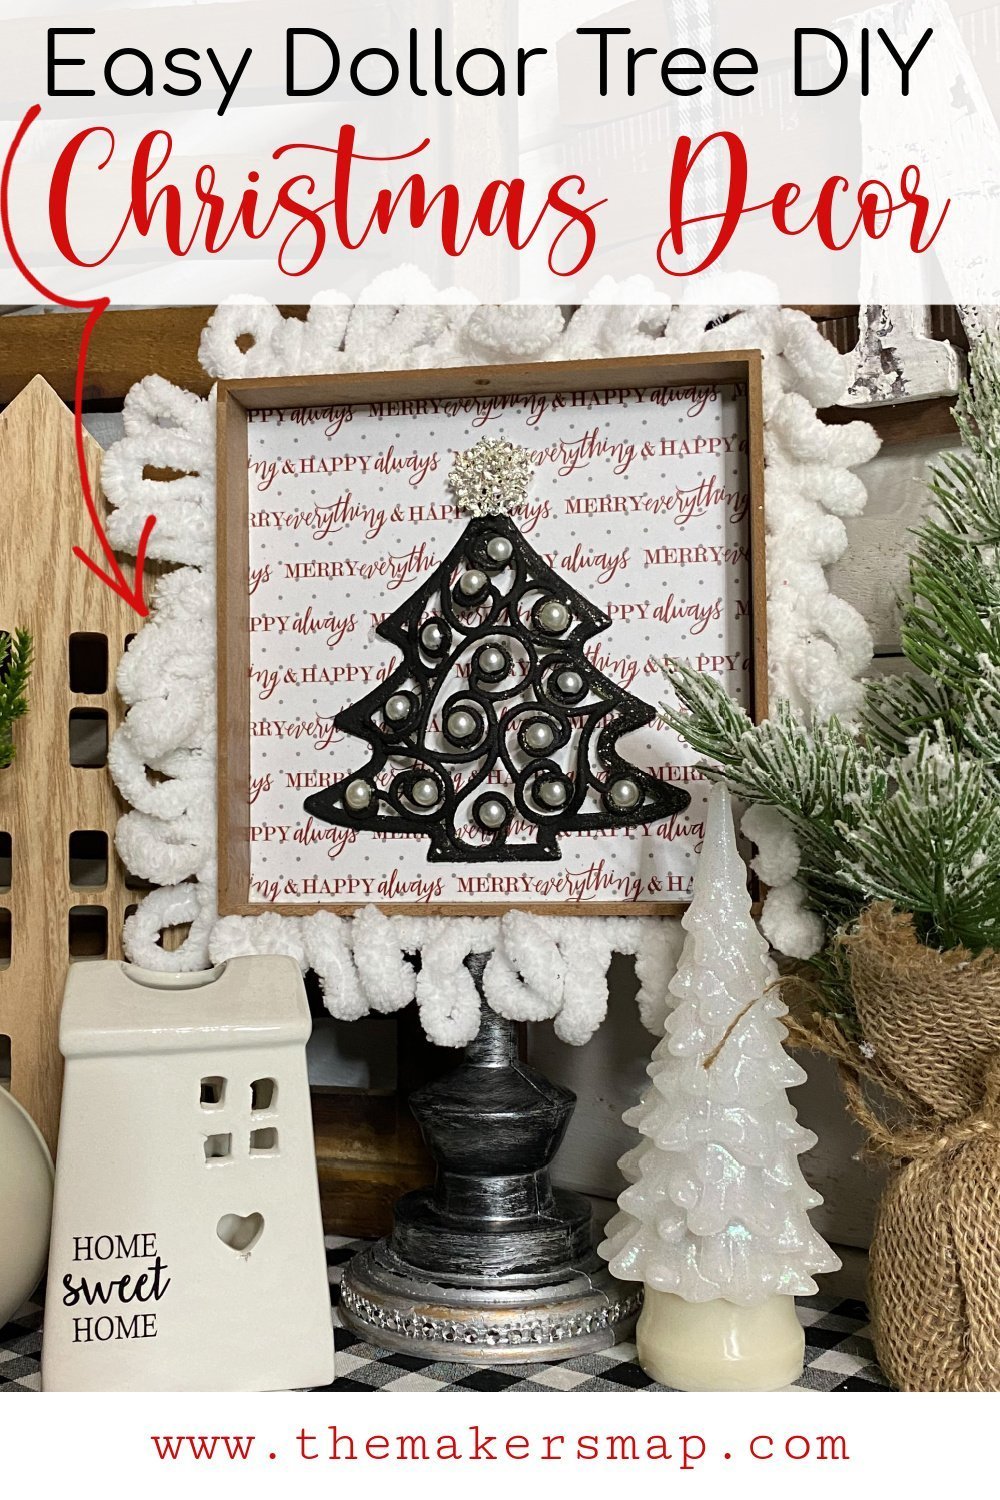 Easy Dollar Tree DIY Christmas Sign